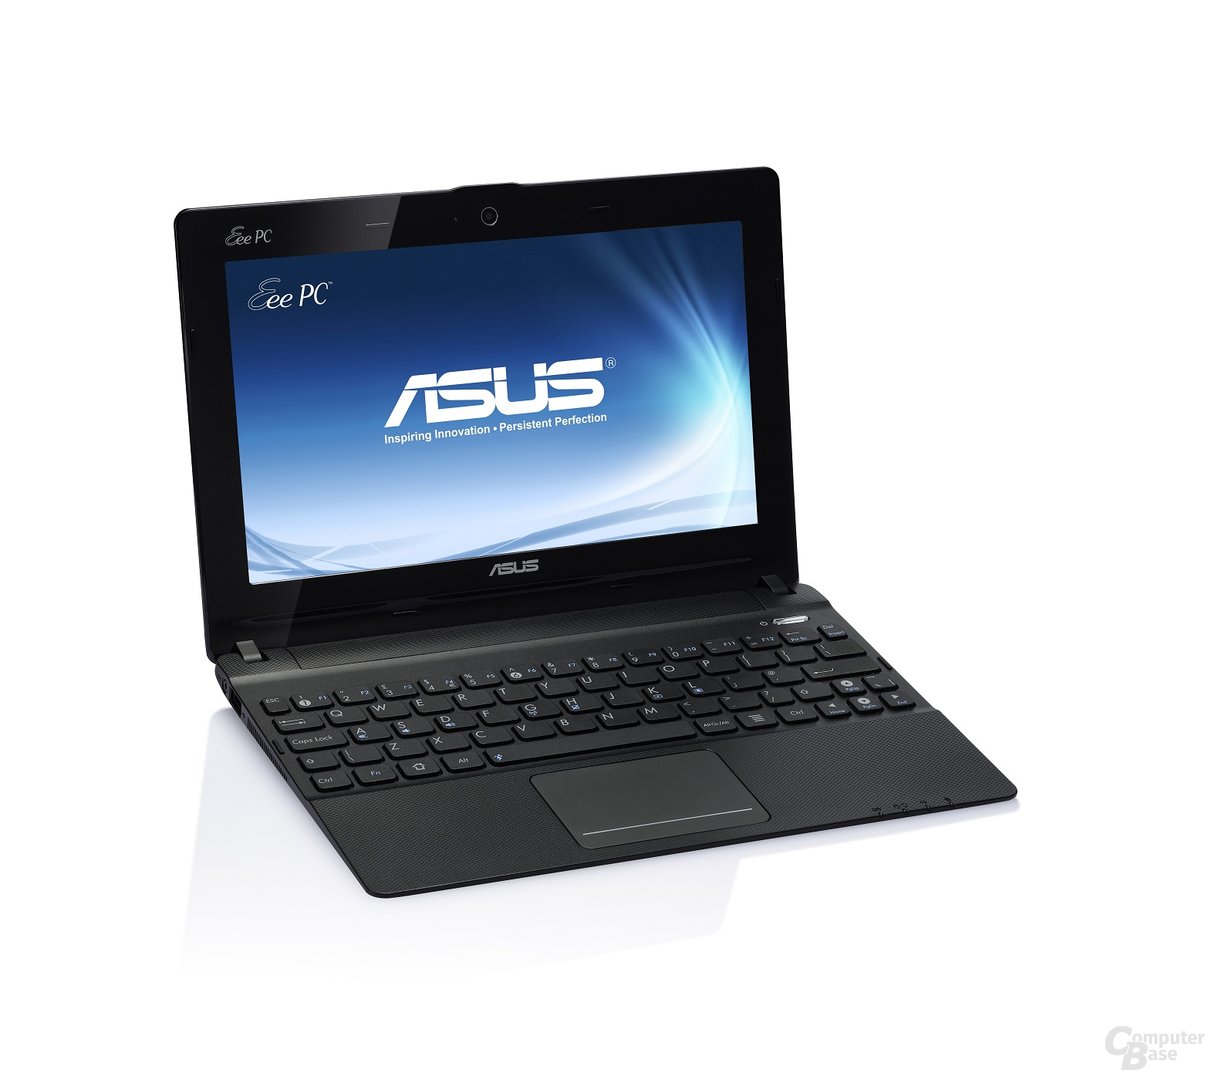 Asus Eee PC X101